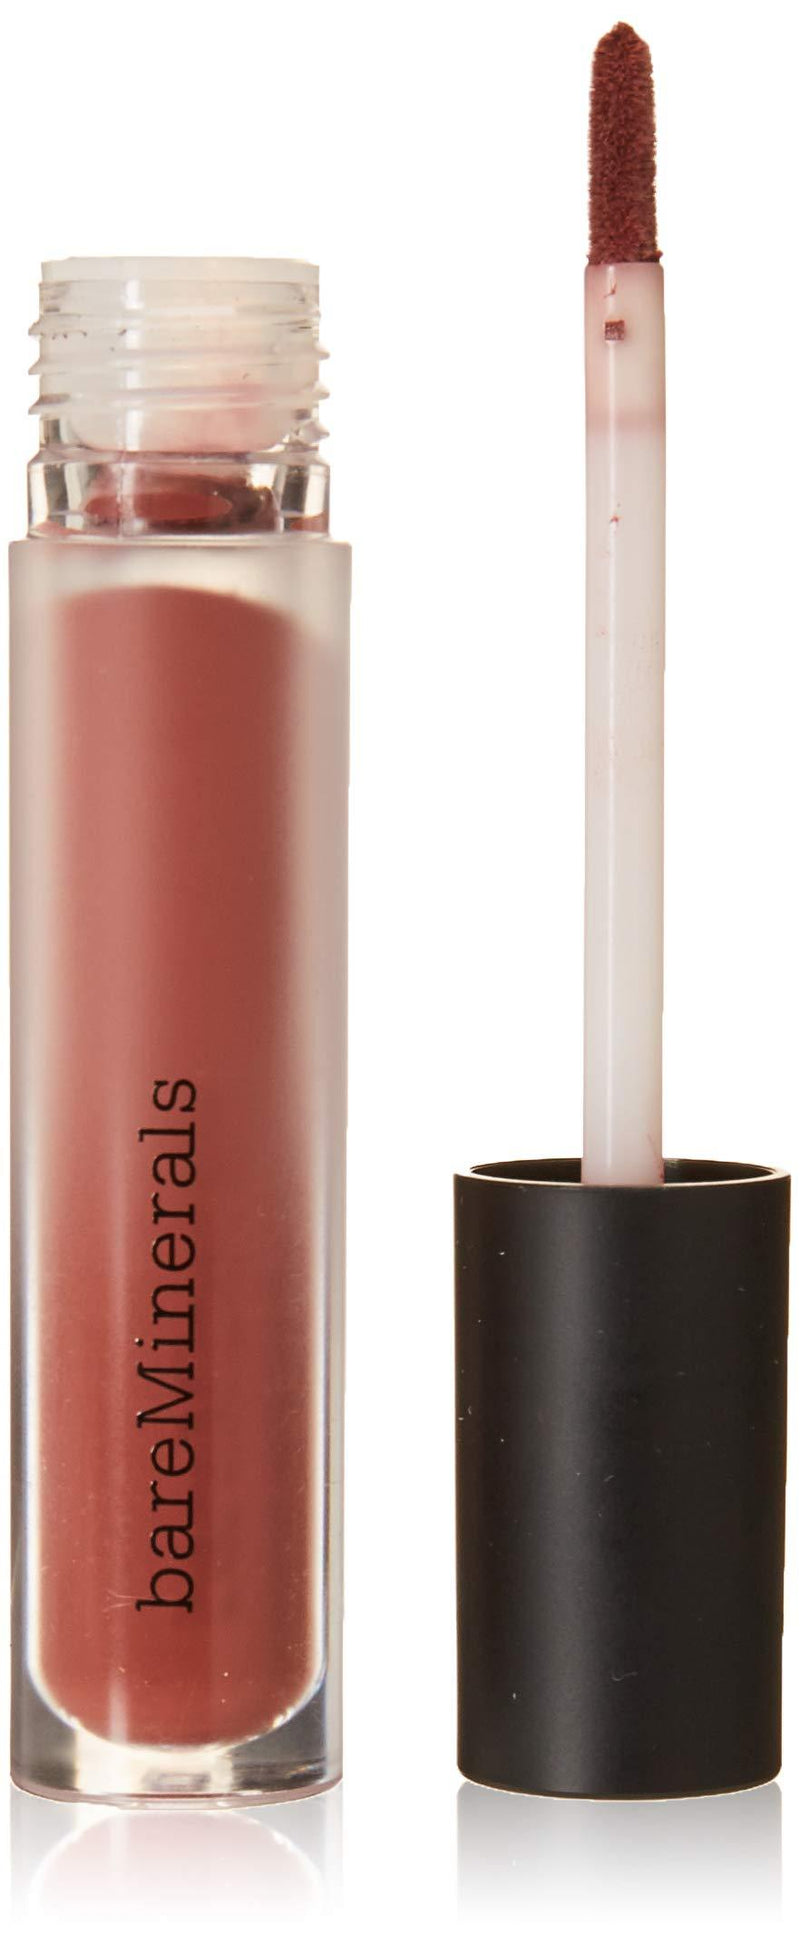 Gen Nude Matte Liquid Lipcolor - Scandal by bareMinerals for Women - 0.13 oz Lipstick